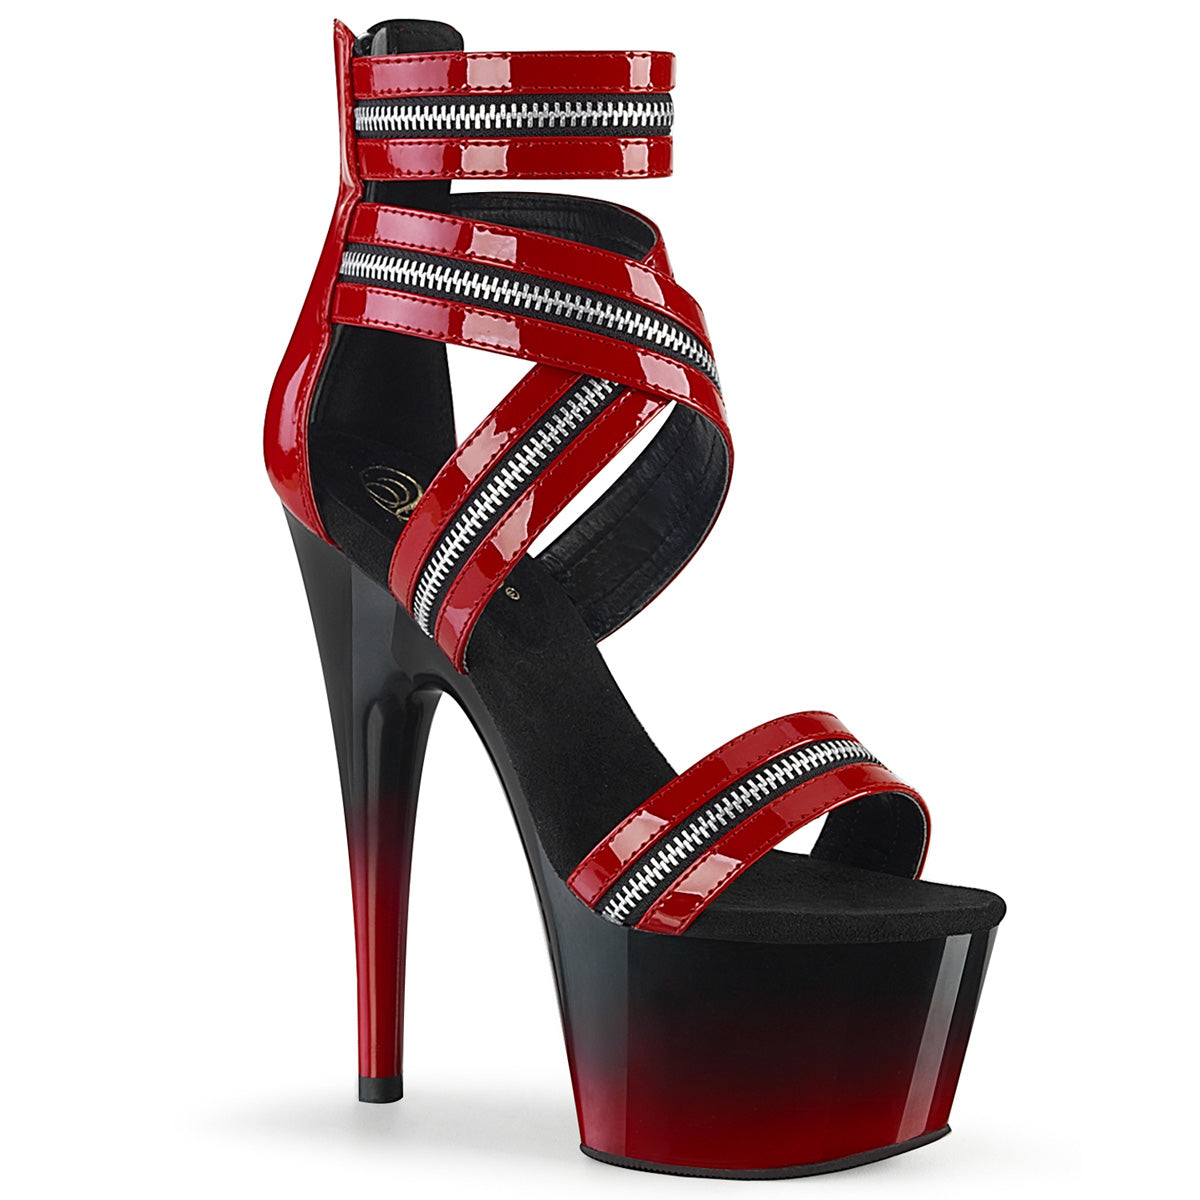 ADORE-766 Pleaser 7 Inch Heel Red Strippers Sandals